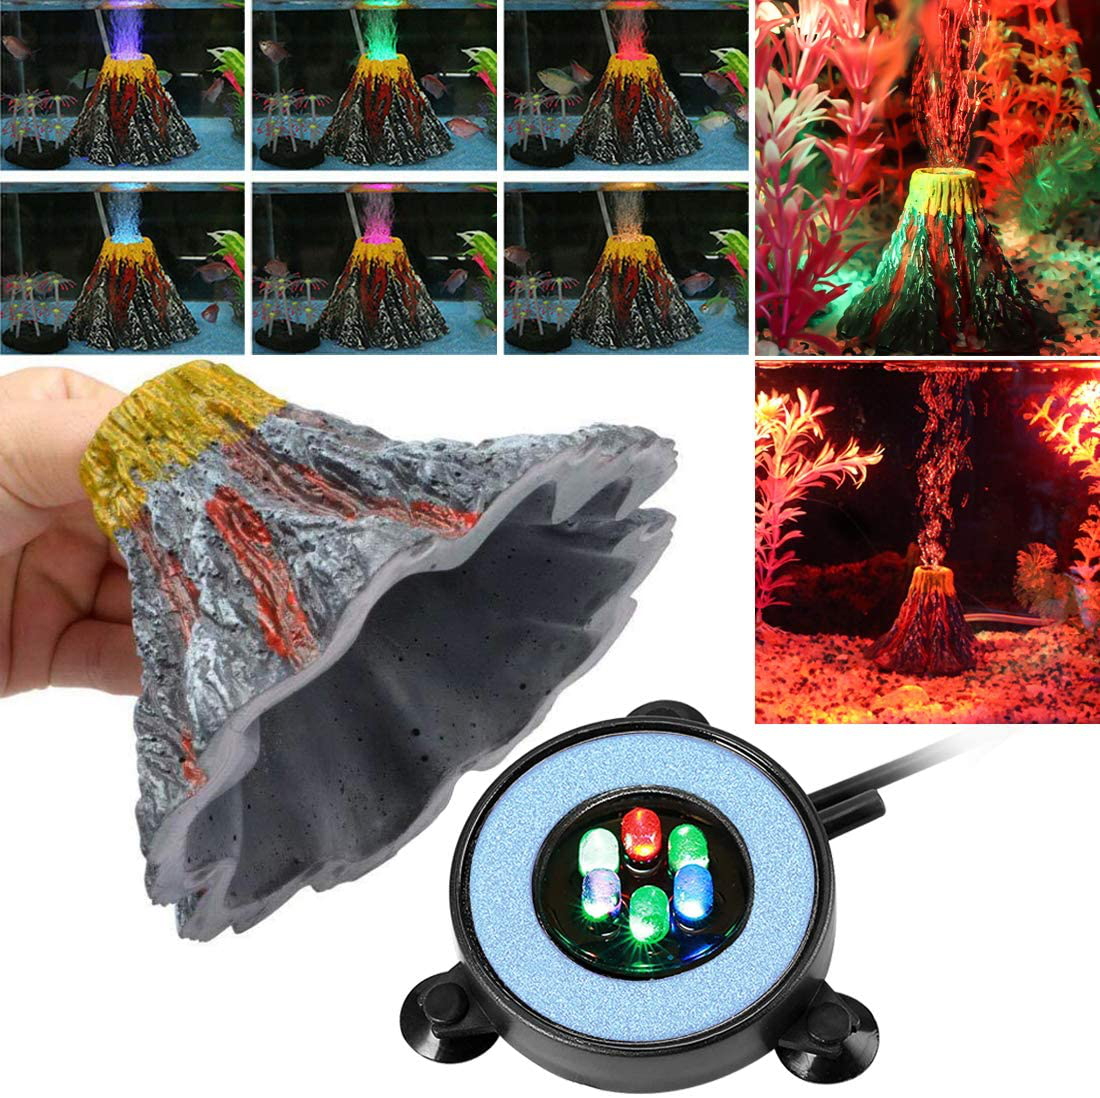 Aquarium Volcano Decoration Kits, 5W Colored Air Bubble Lights with 6 Leds, Aquarium Decoration Lamps with Air Pump